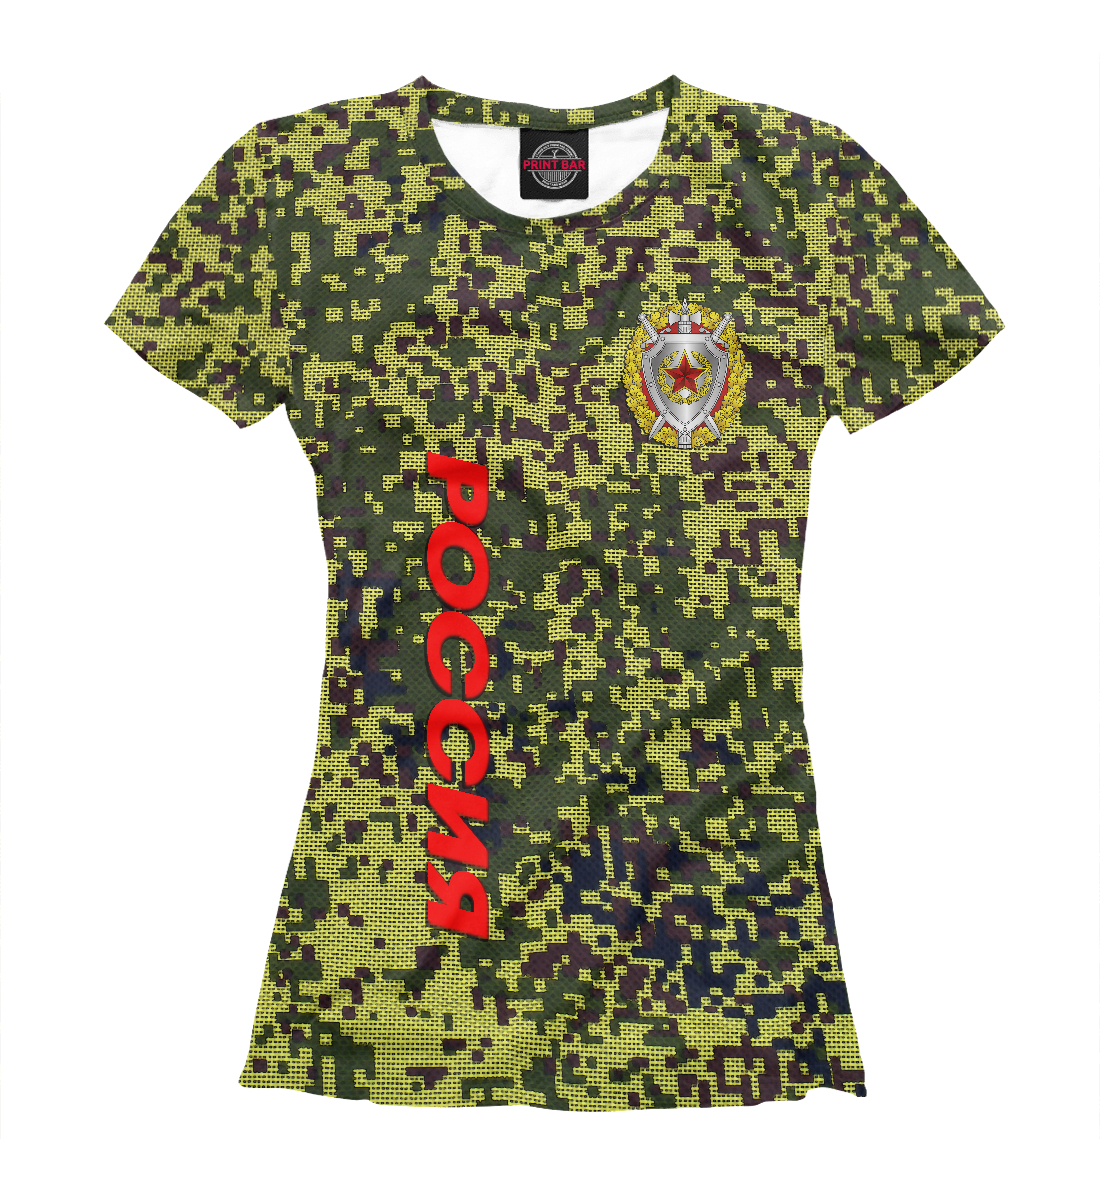 Футболка Армия России для женщин, артикул: ARZ-212130-fut-1mp